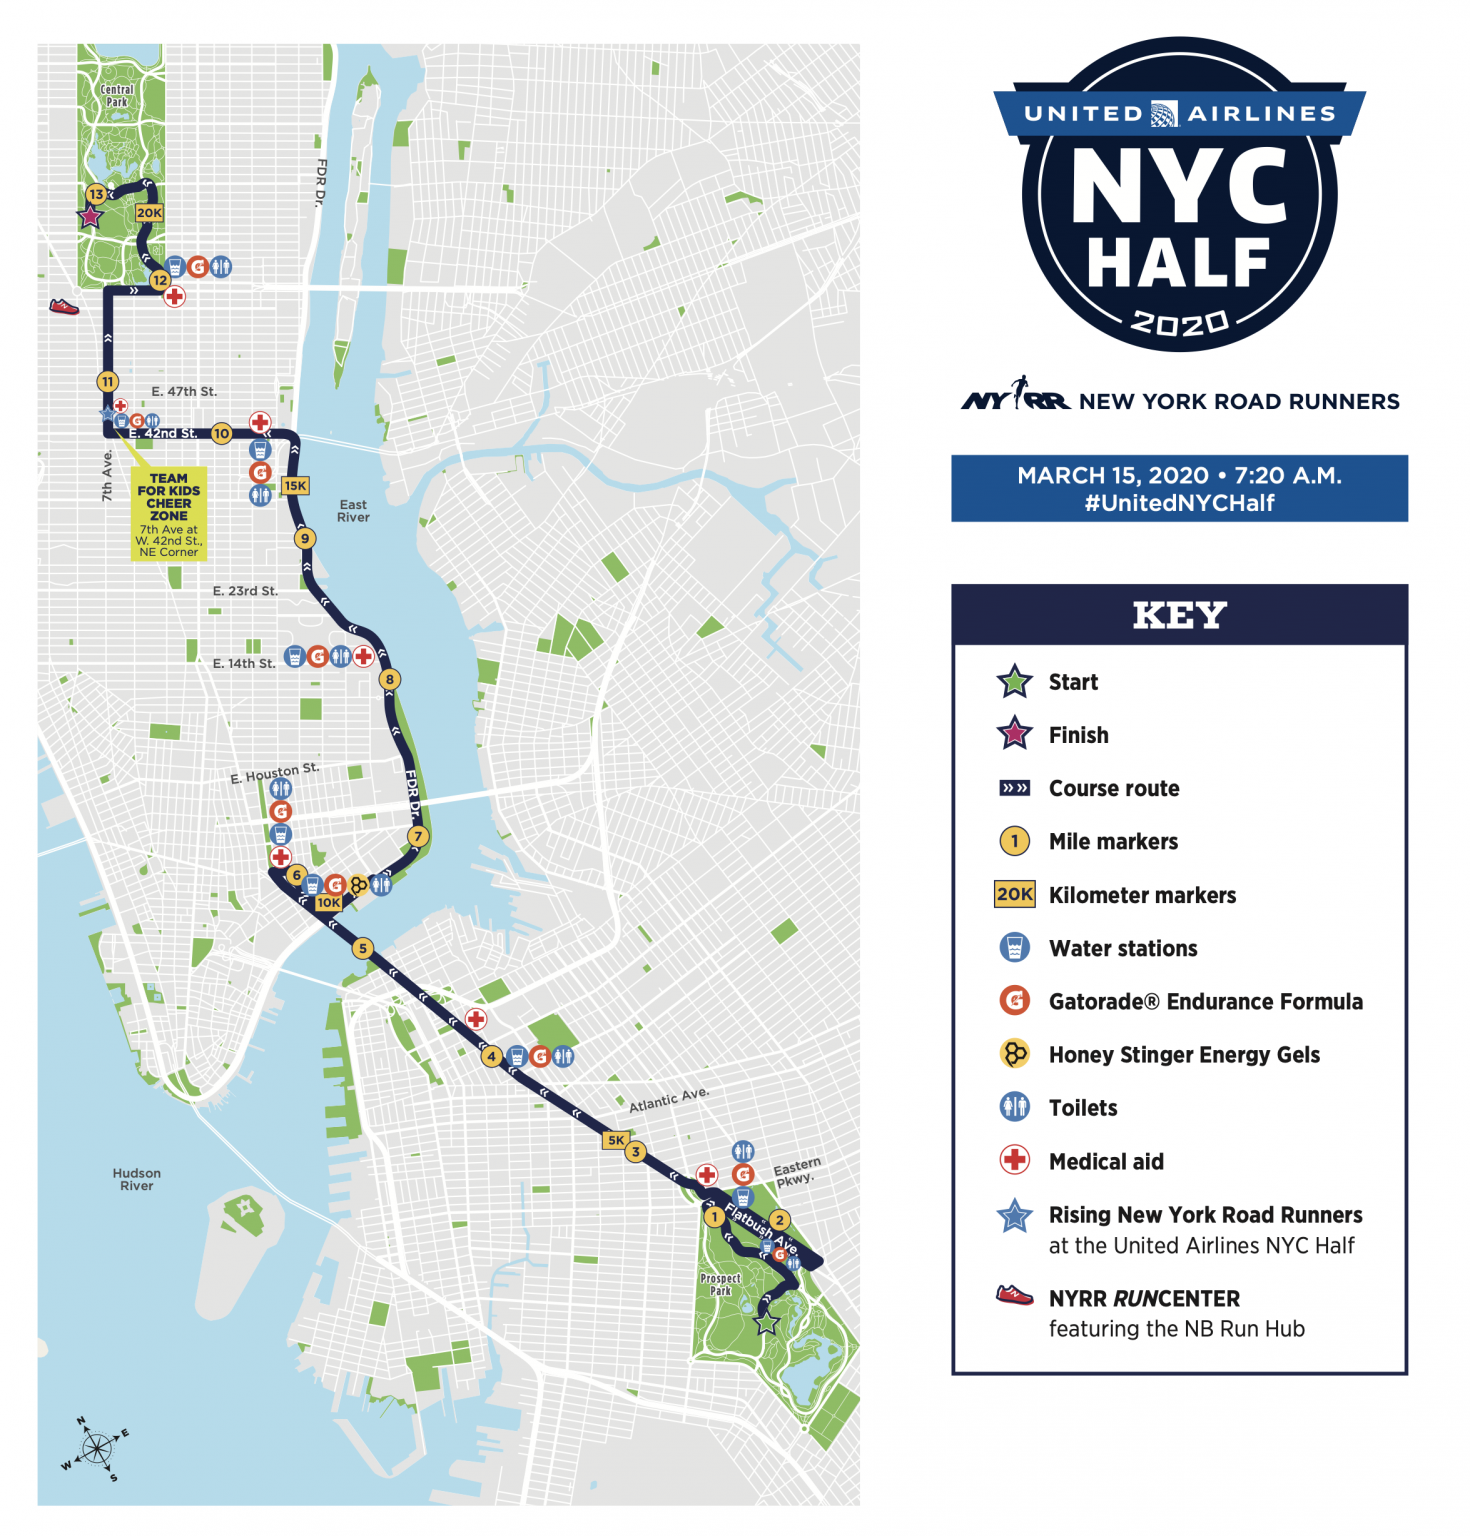 The NYC Half Marathon is almost here! Robert J. Gates